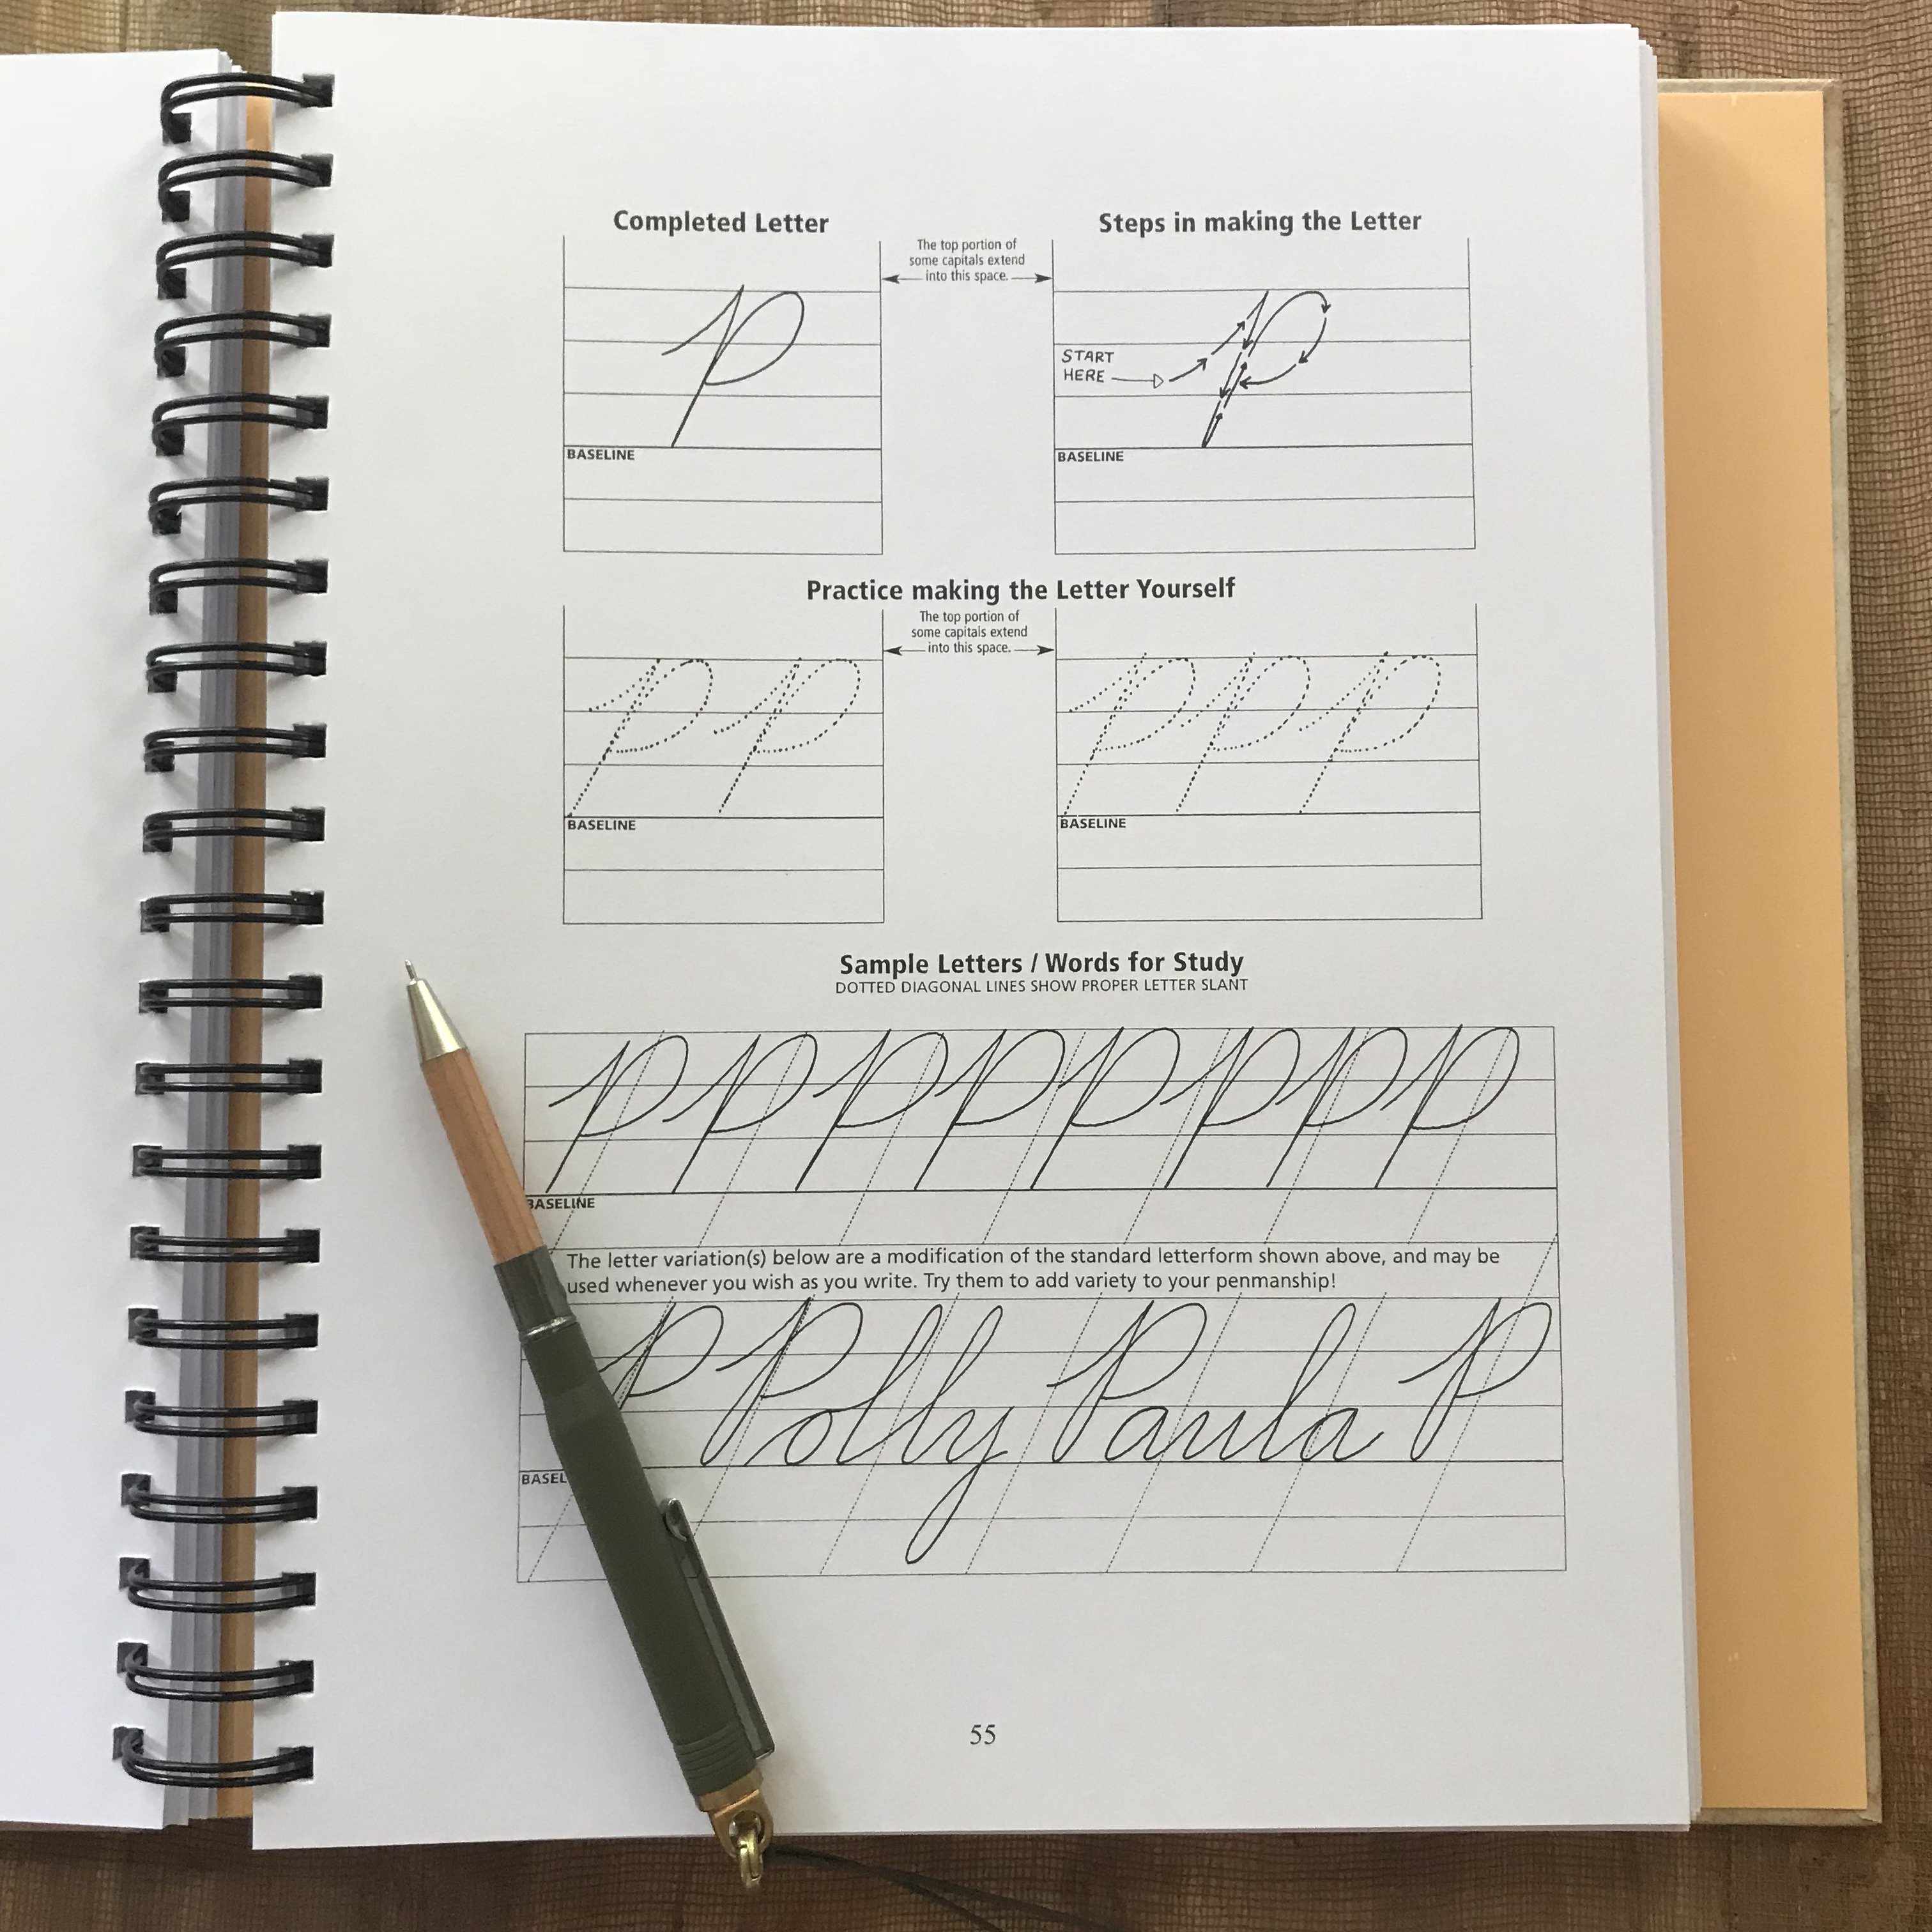 Cursive Handwriting Workbook for Adults Art of Penmanship